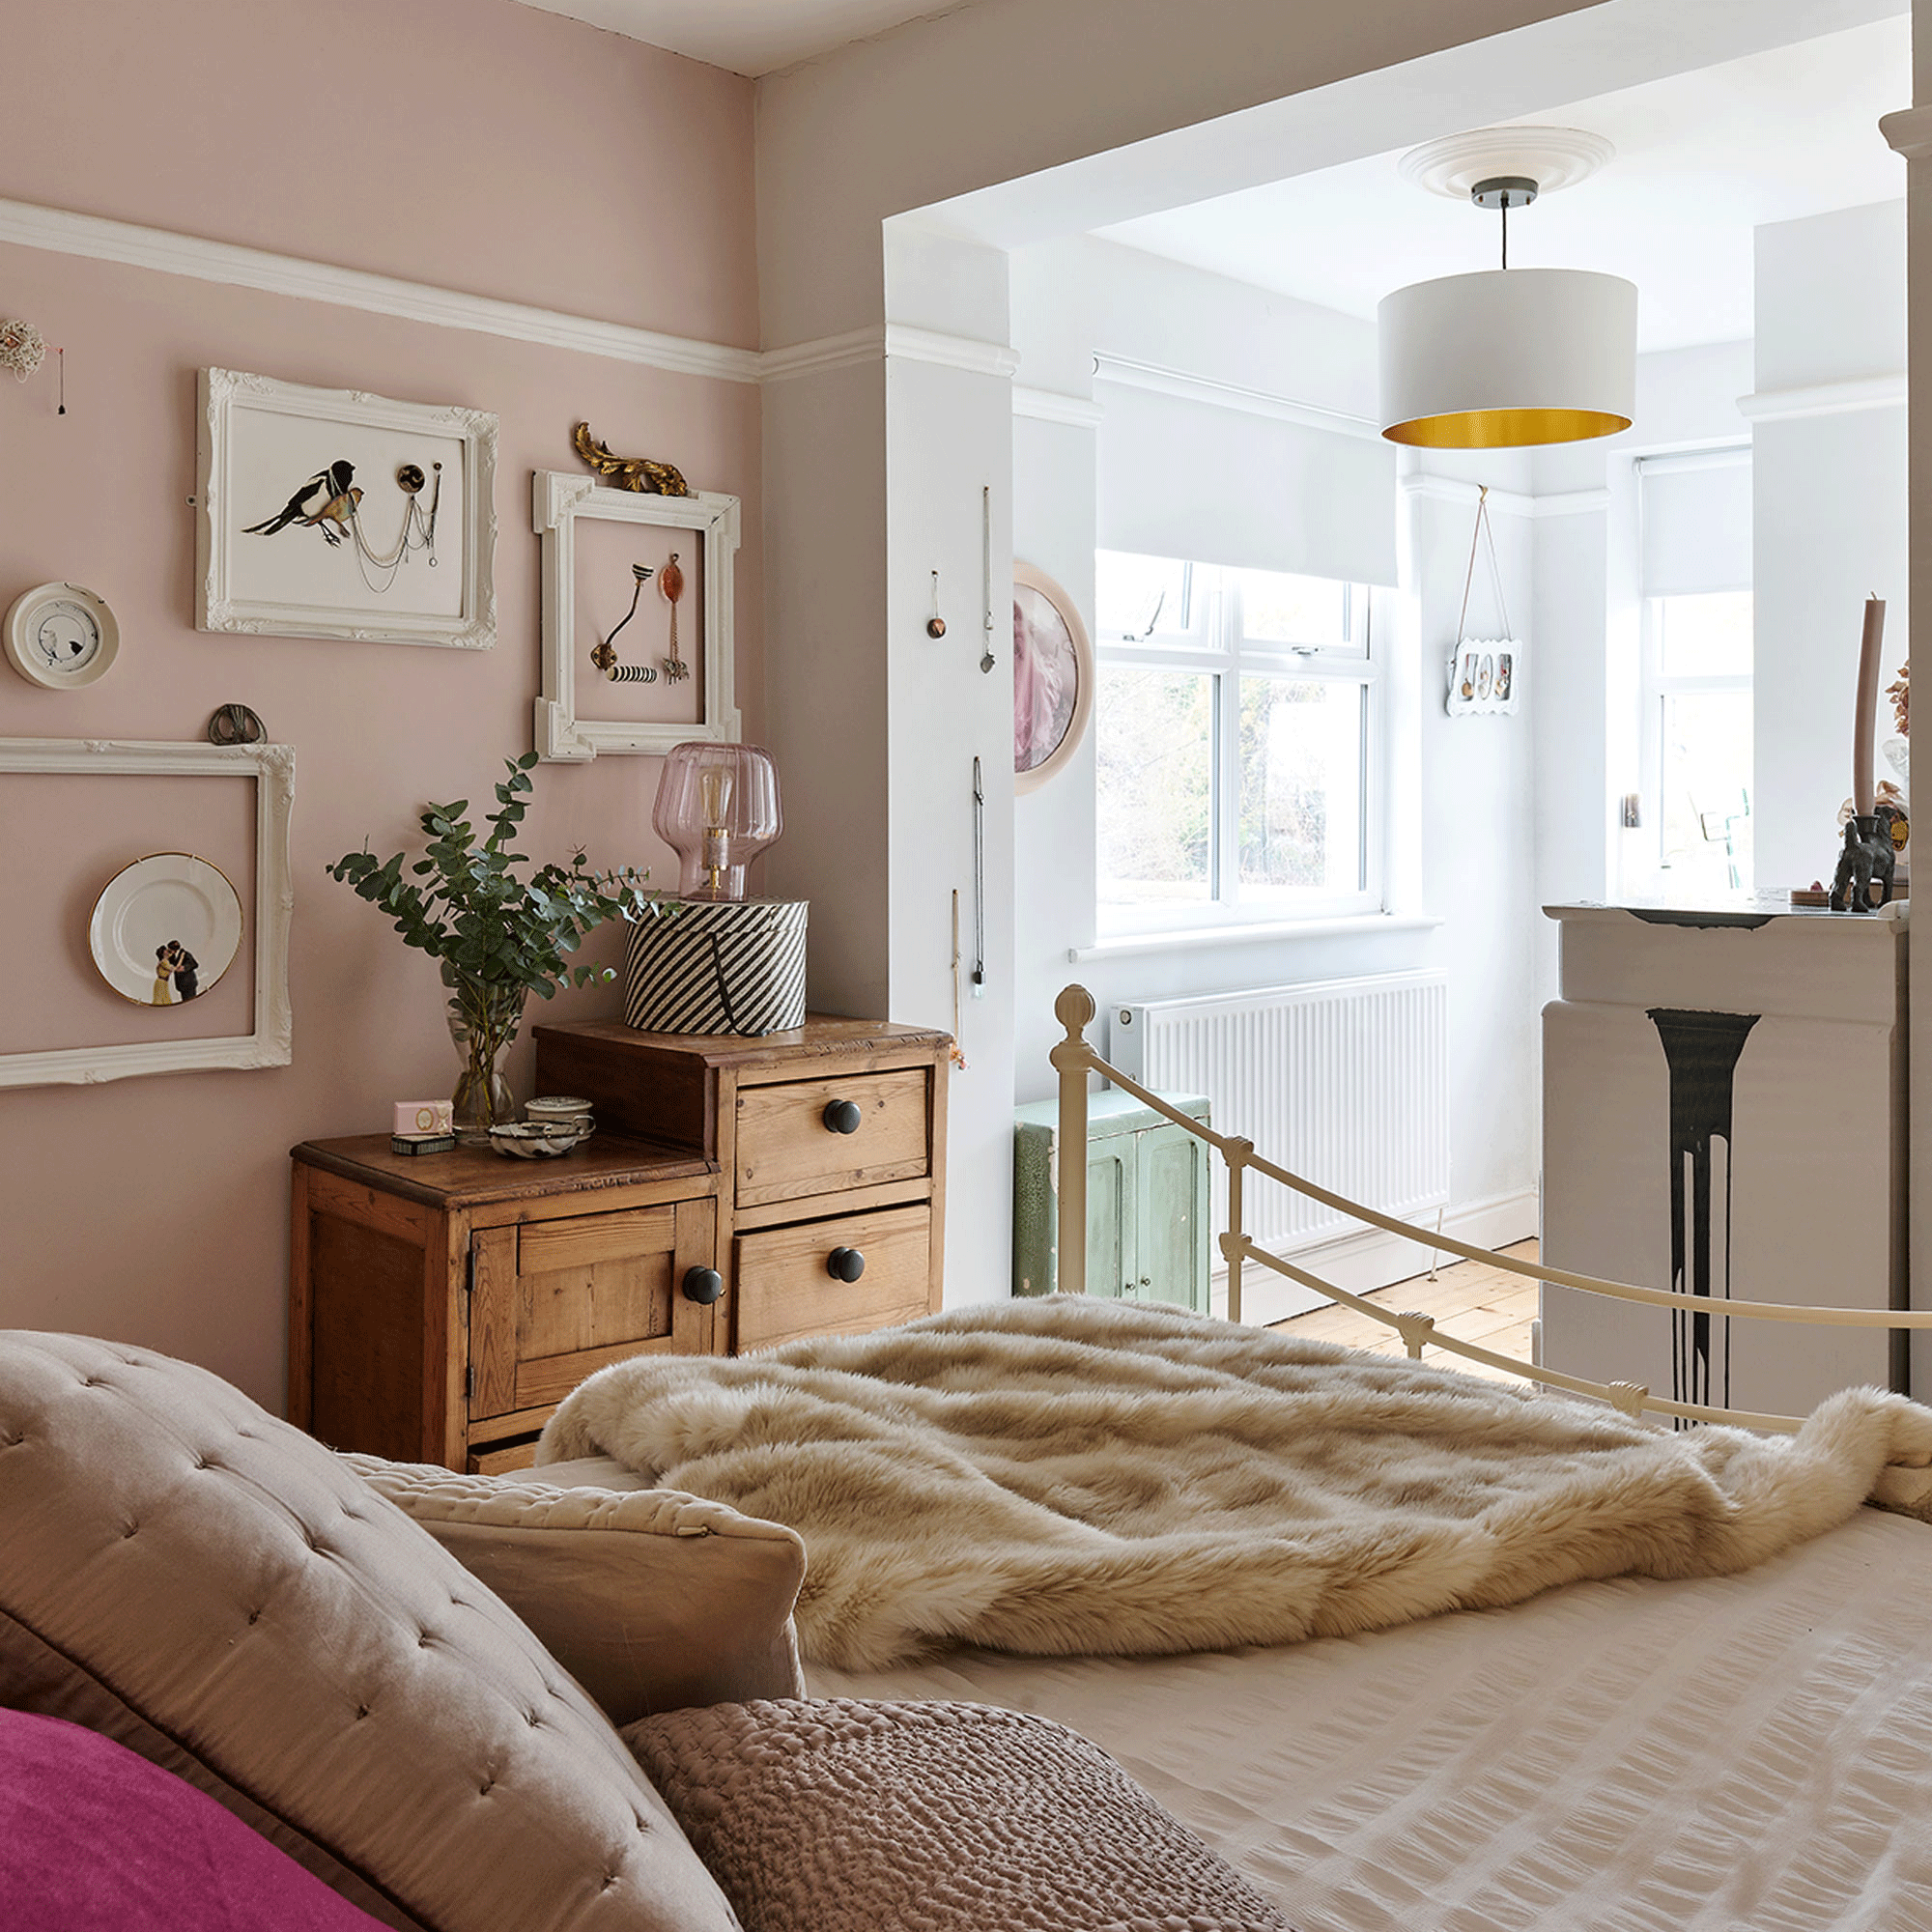 Pink bedroom with fur blanket